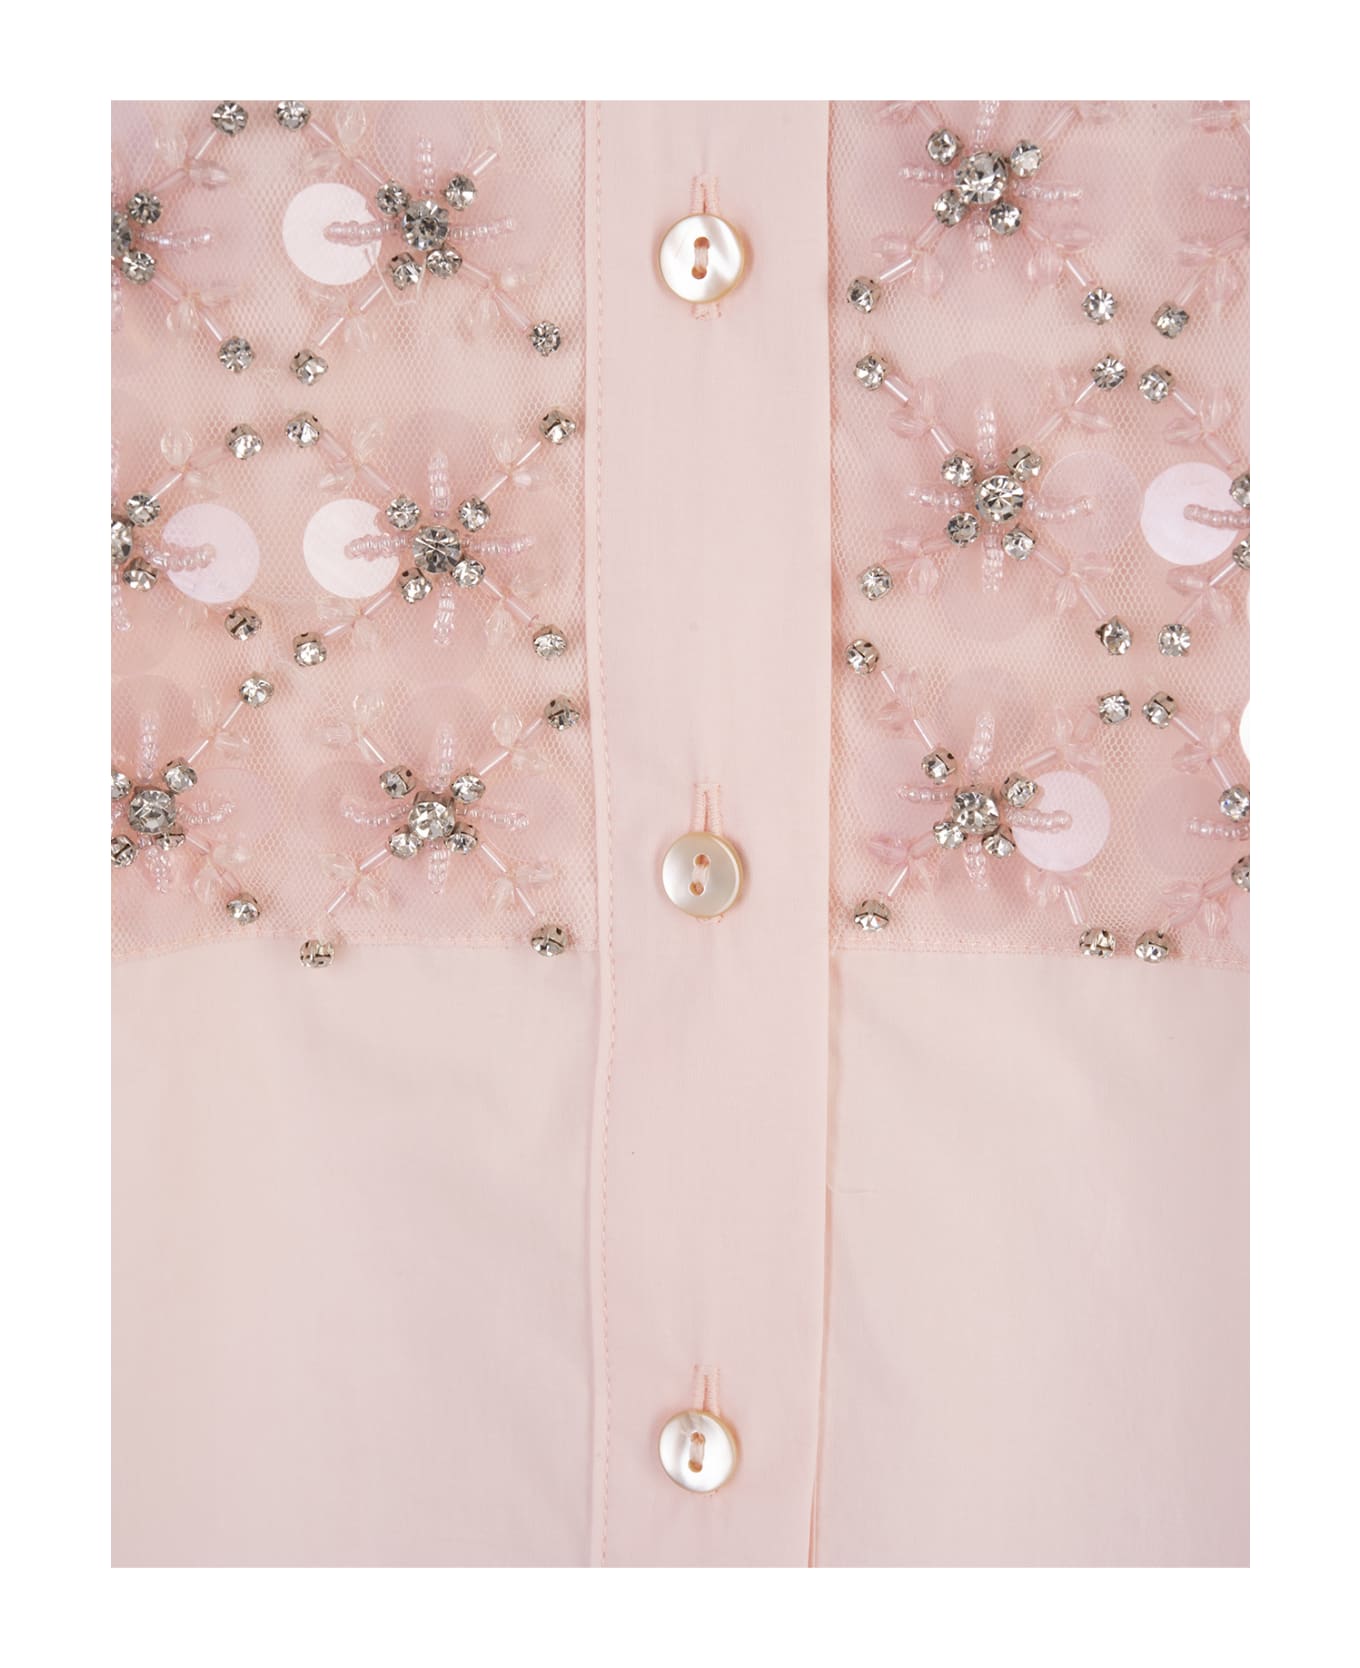 Parosh Pink Sequins Canyox Shirt - Pink シャツ